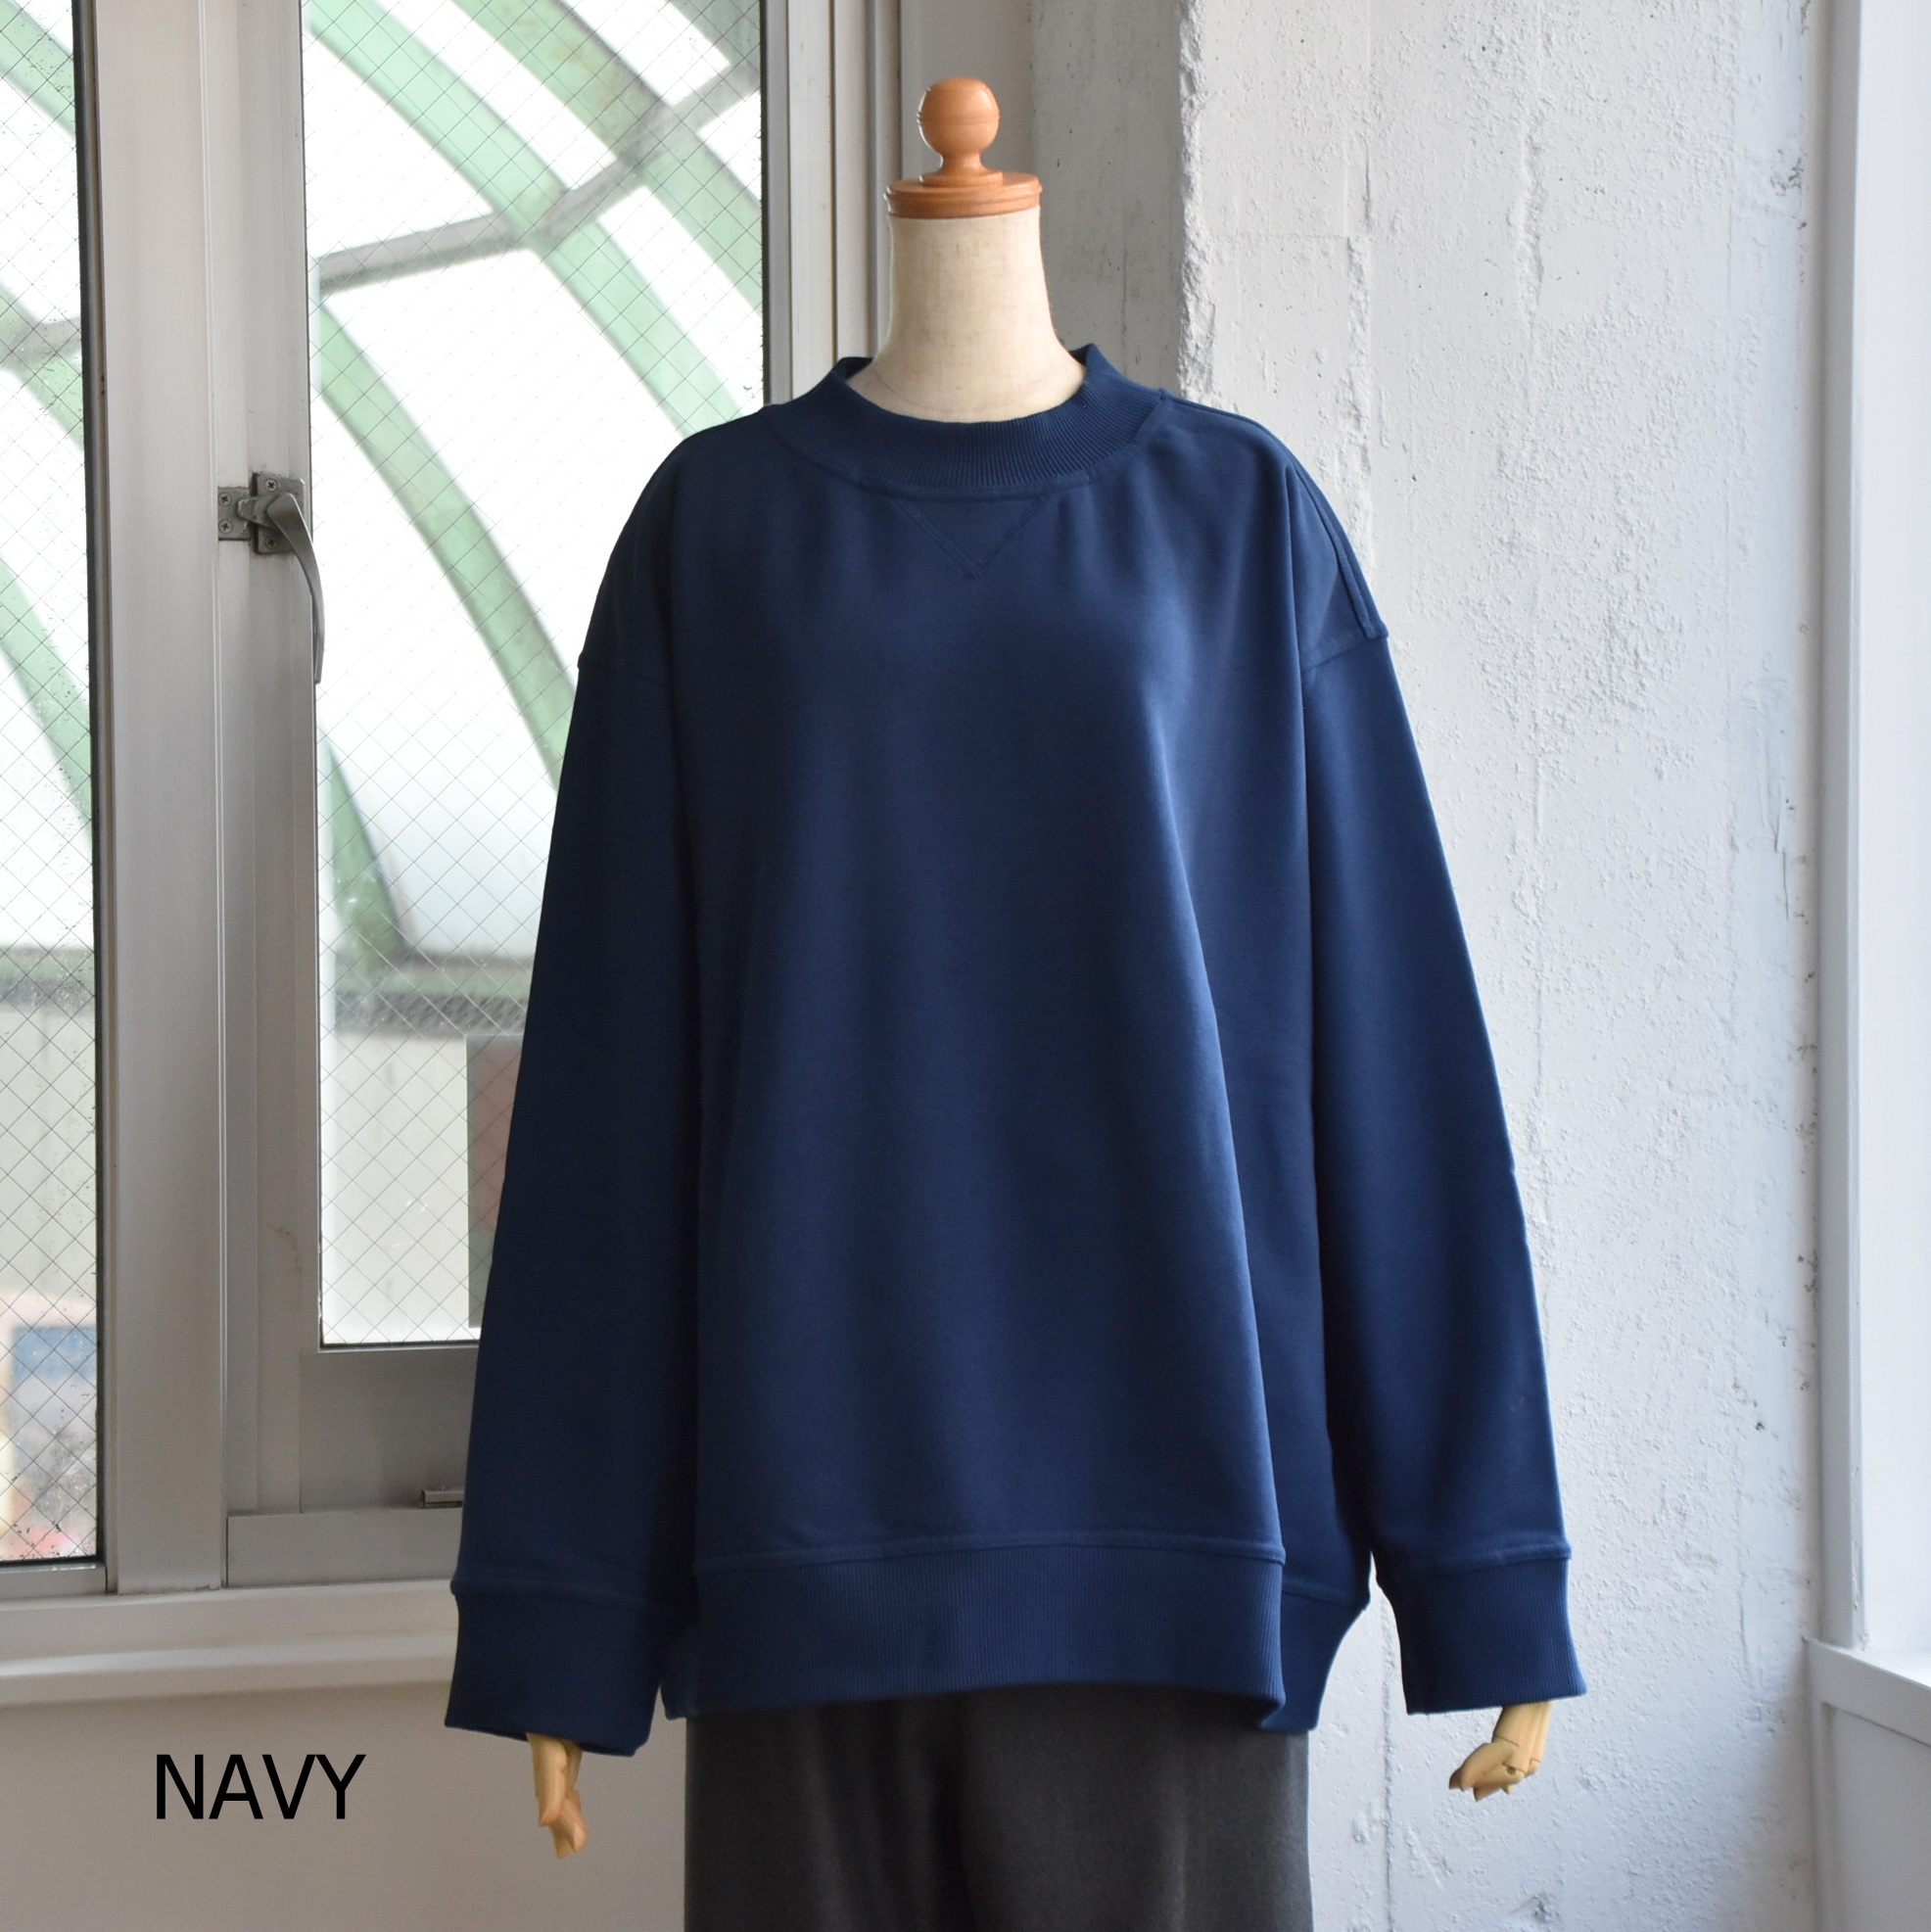 y40% off salezSOFIE D'HOORE(\tB[h[) / Long sleeve C-neck sweatshirt with top stichy2FWJz #TASTE-AA(5)